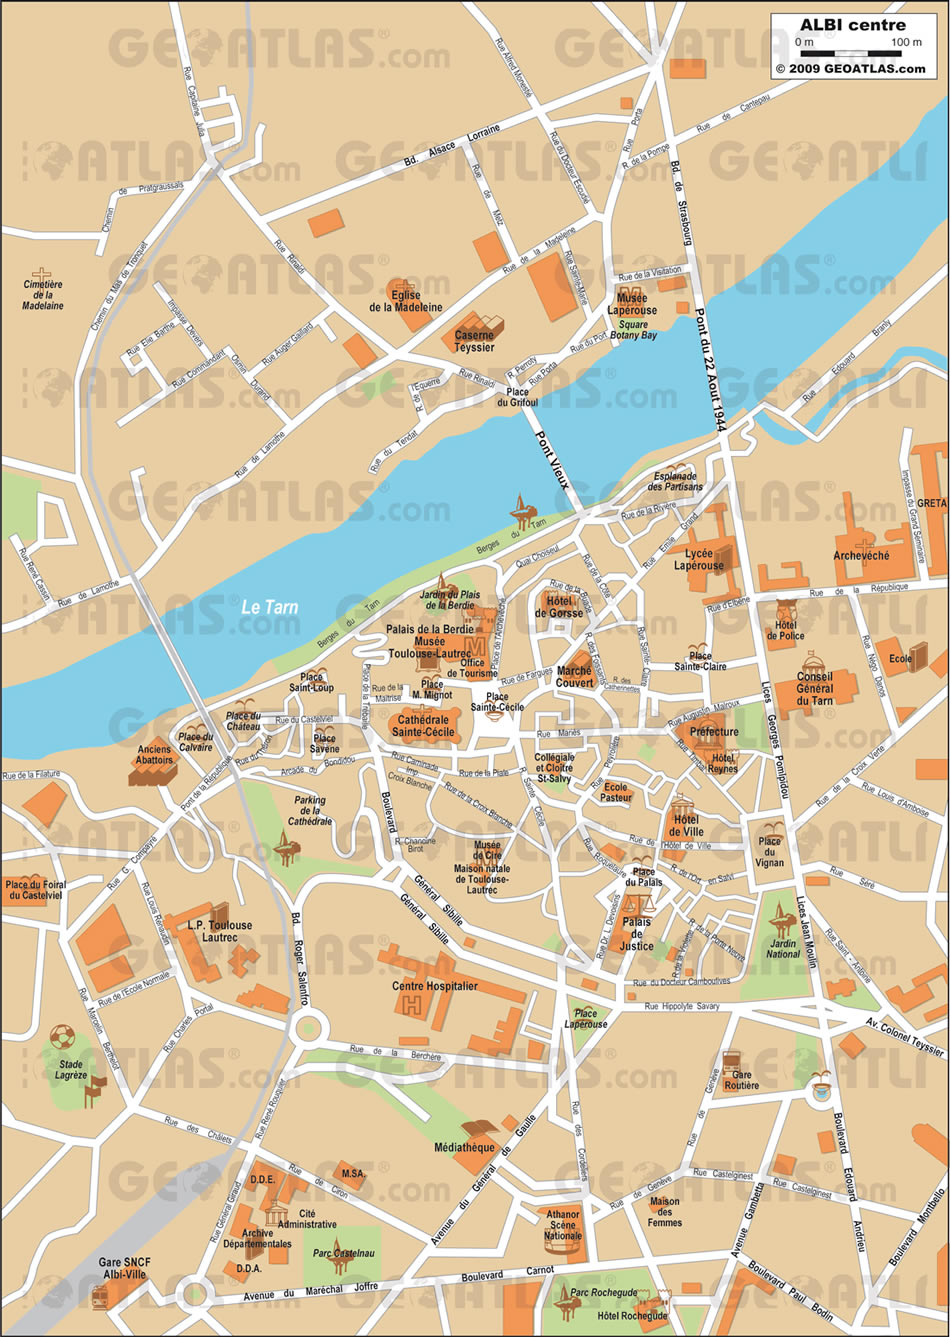 Albi touristic map